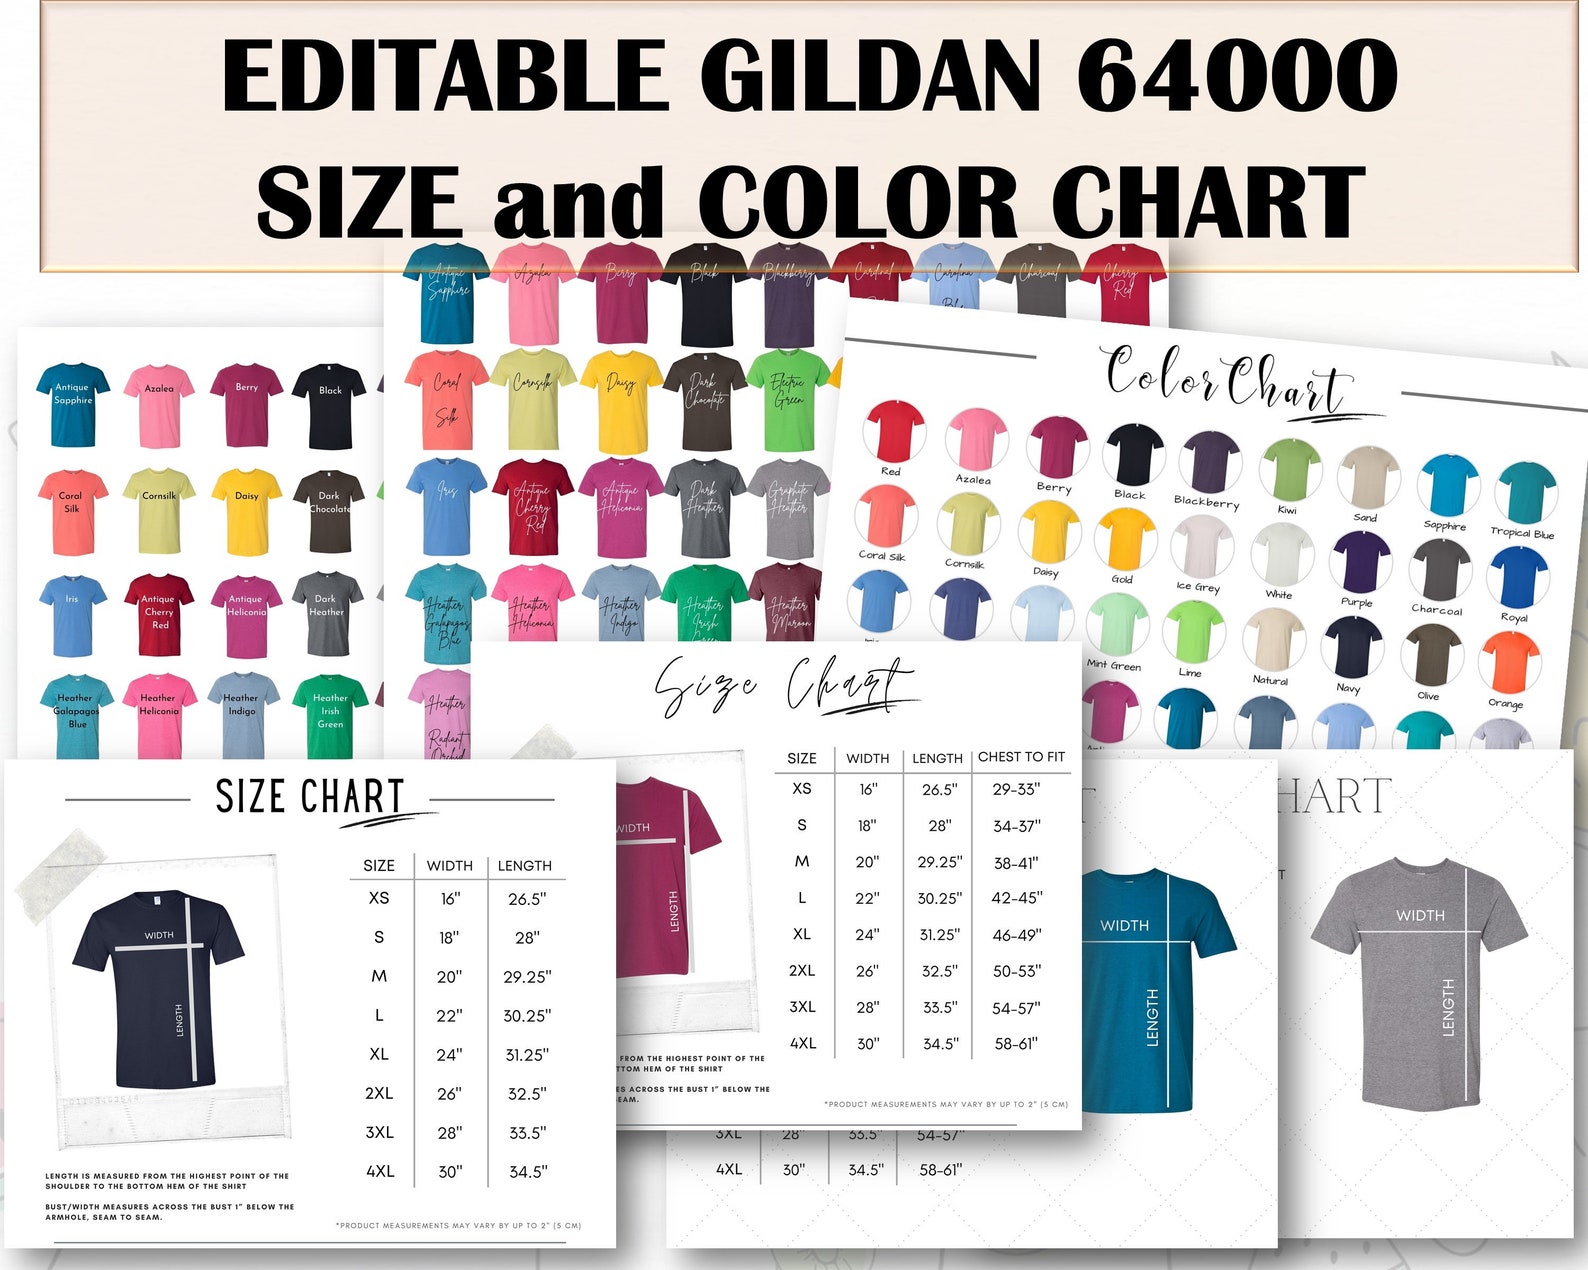 Editable Gildan 64000 Color Chart and size chartGildan G640 | Etsy